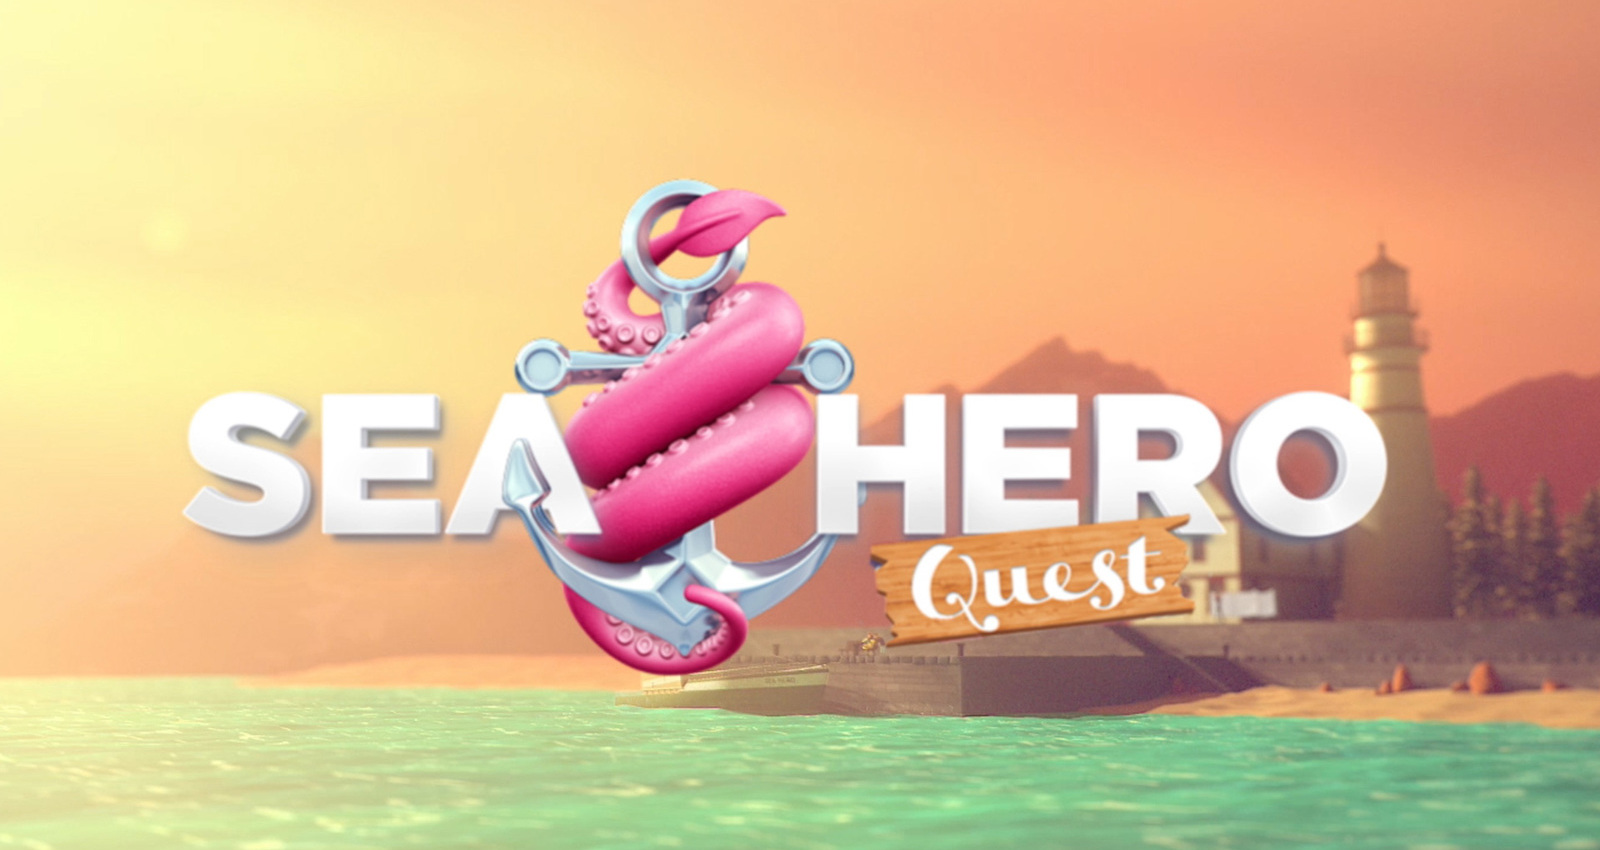 Sea Hero Quest 